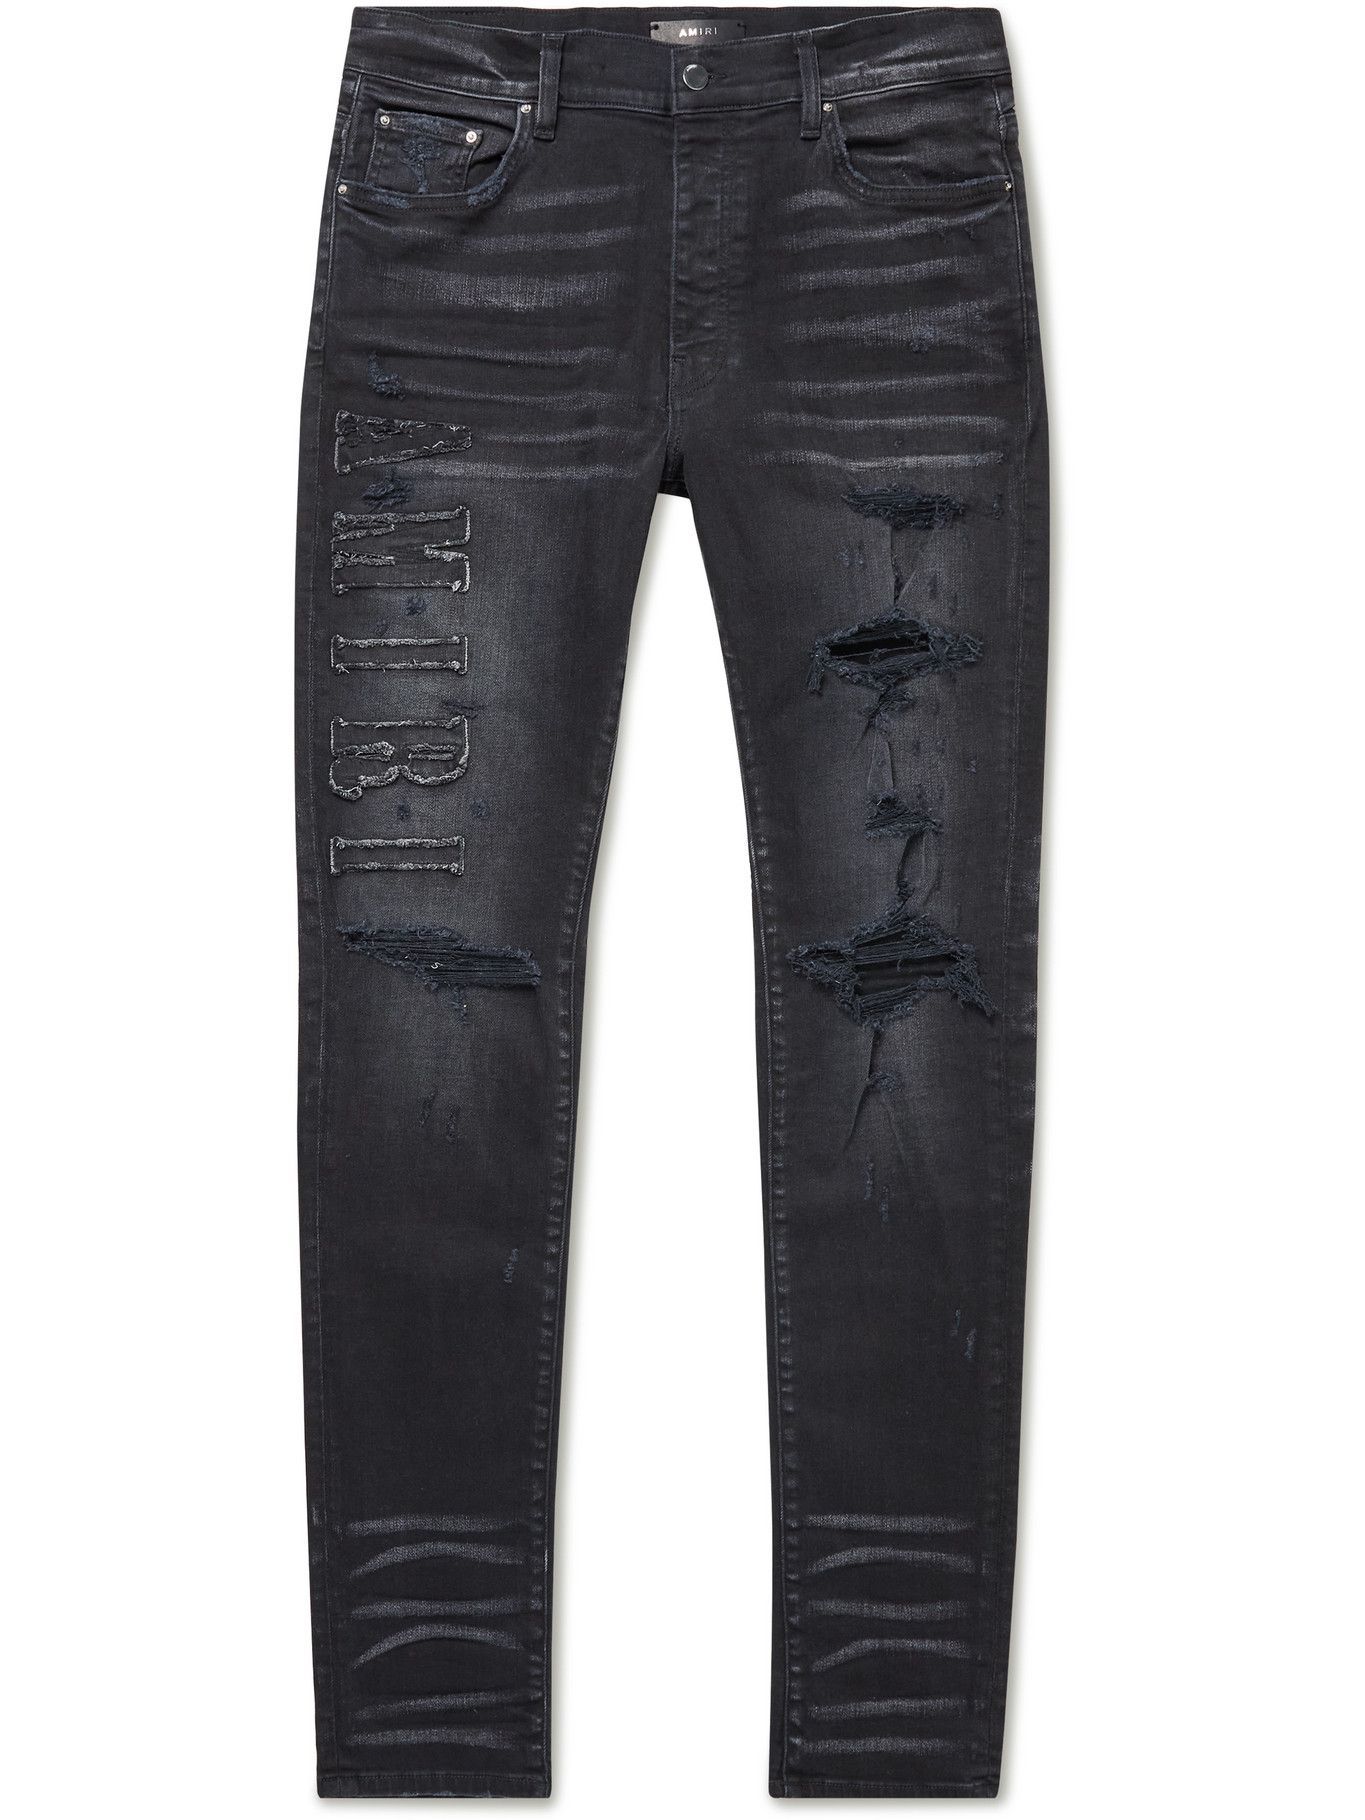 AMIRI - Skinny-Fit Logo-Appliquéd Distressed Jeans - Black Amiri